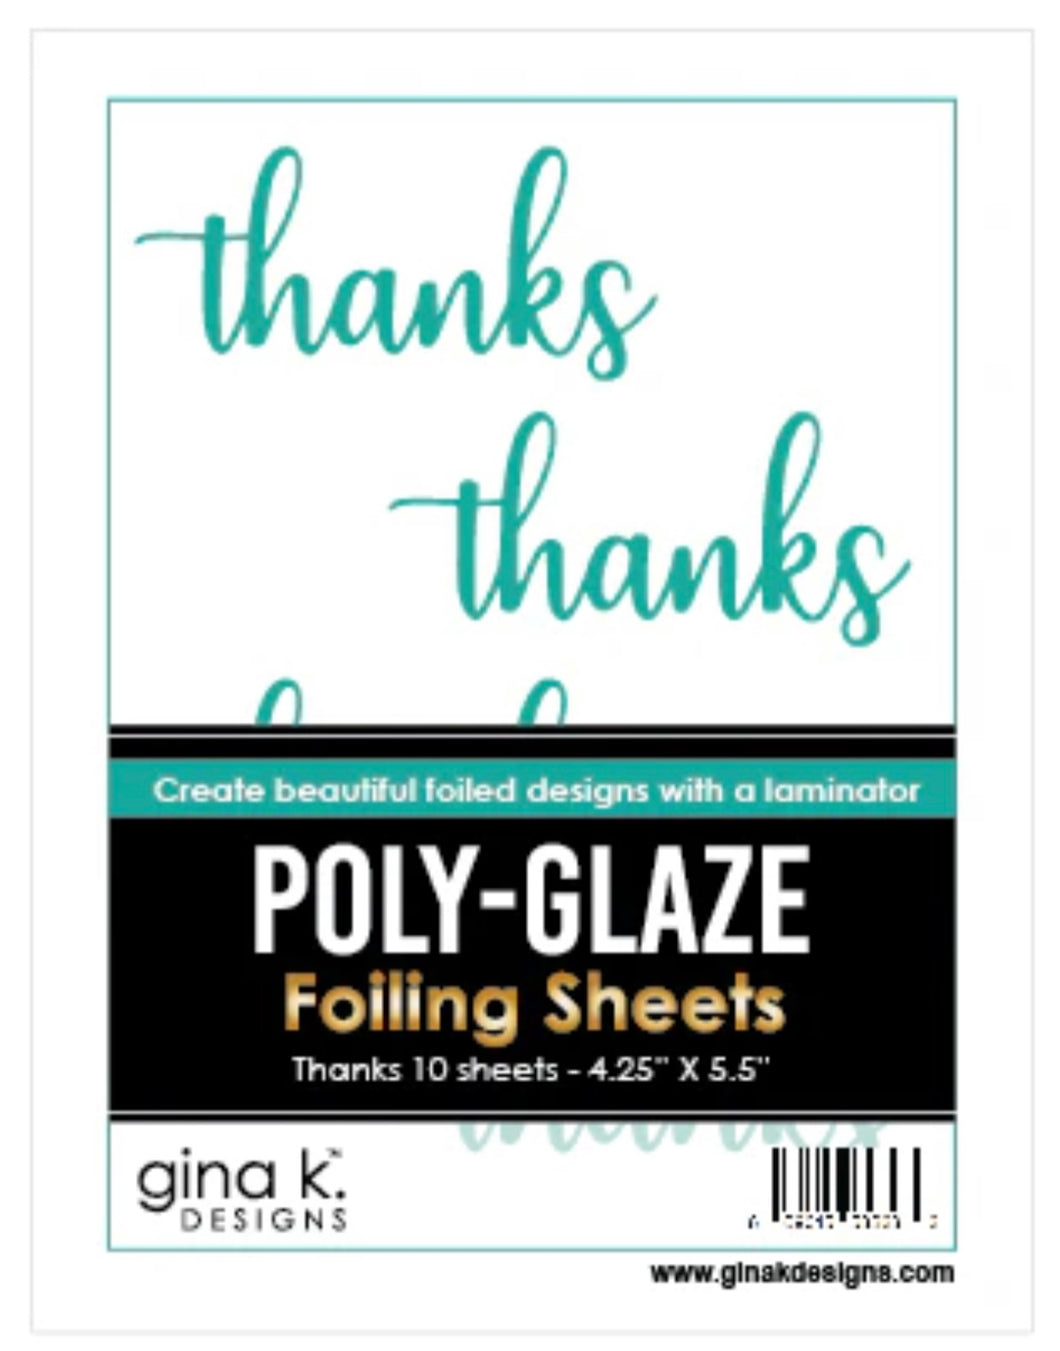 Gina K Designs - Poly-Glaze Foiling Sheets - Thanks